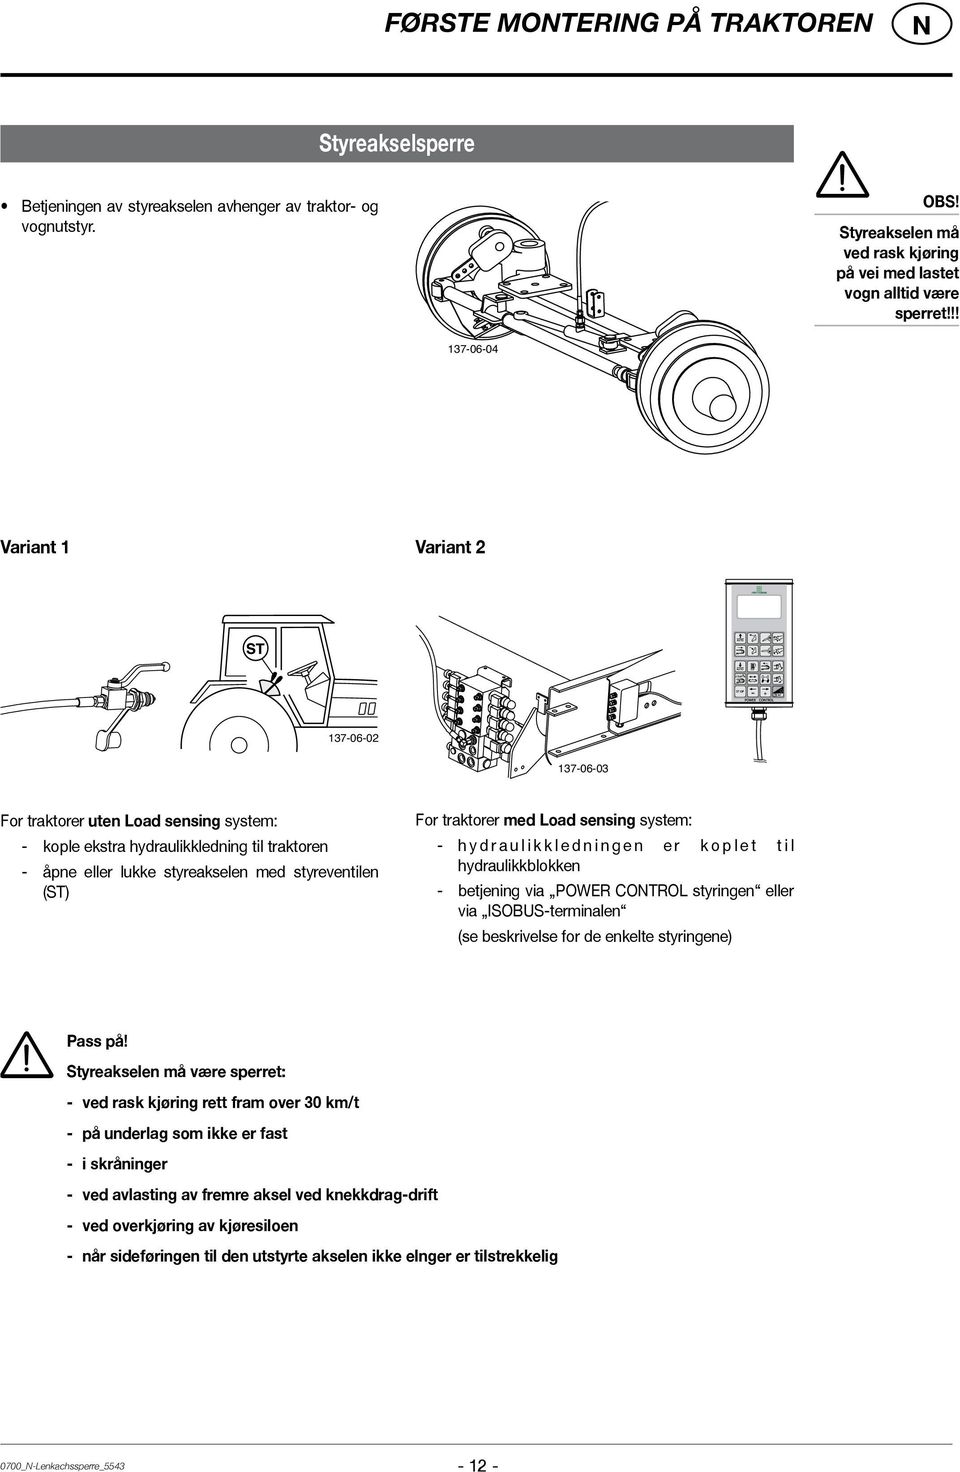 traktorer med Load sensing system: - h y d r a u l i k k l e d n i n g e n e r k o p l e t t i l hydraulikkblokken - betjening via POWER COTROL styringen eller via ISOBUS-terminalen (se beskrivelse